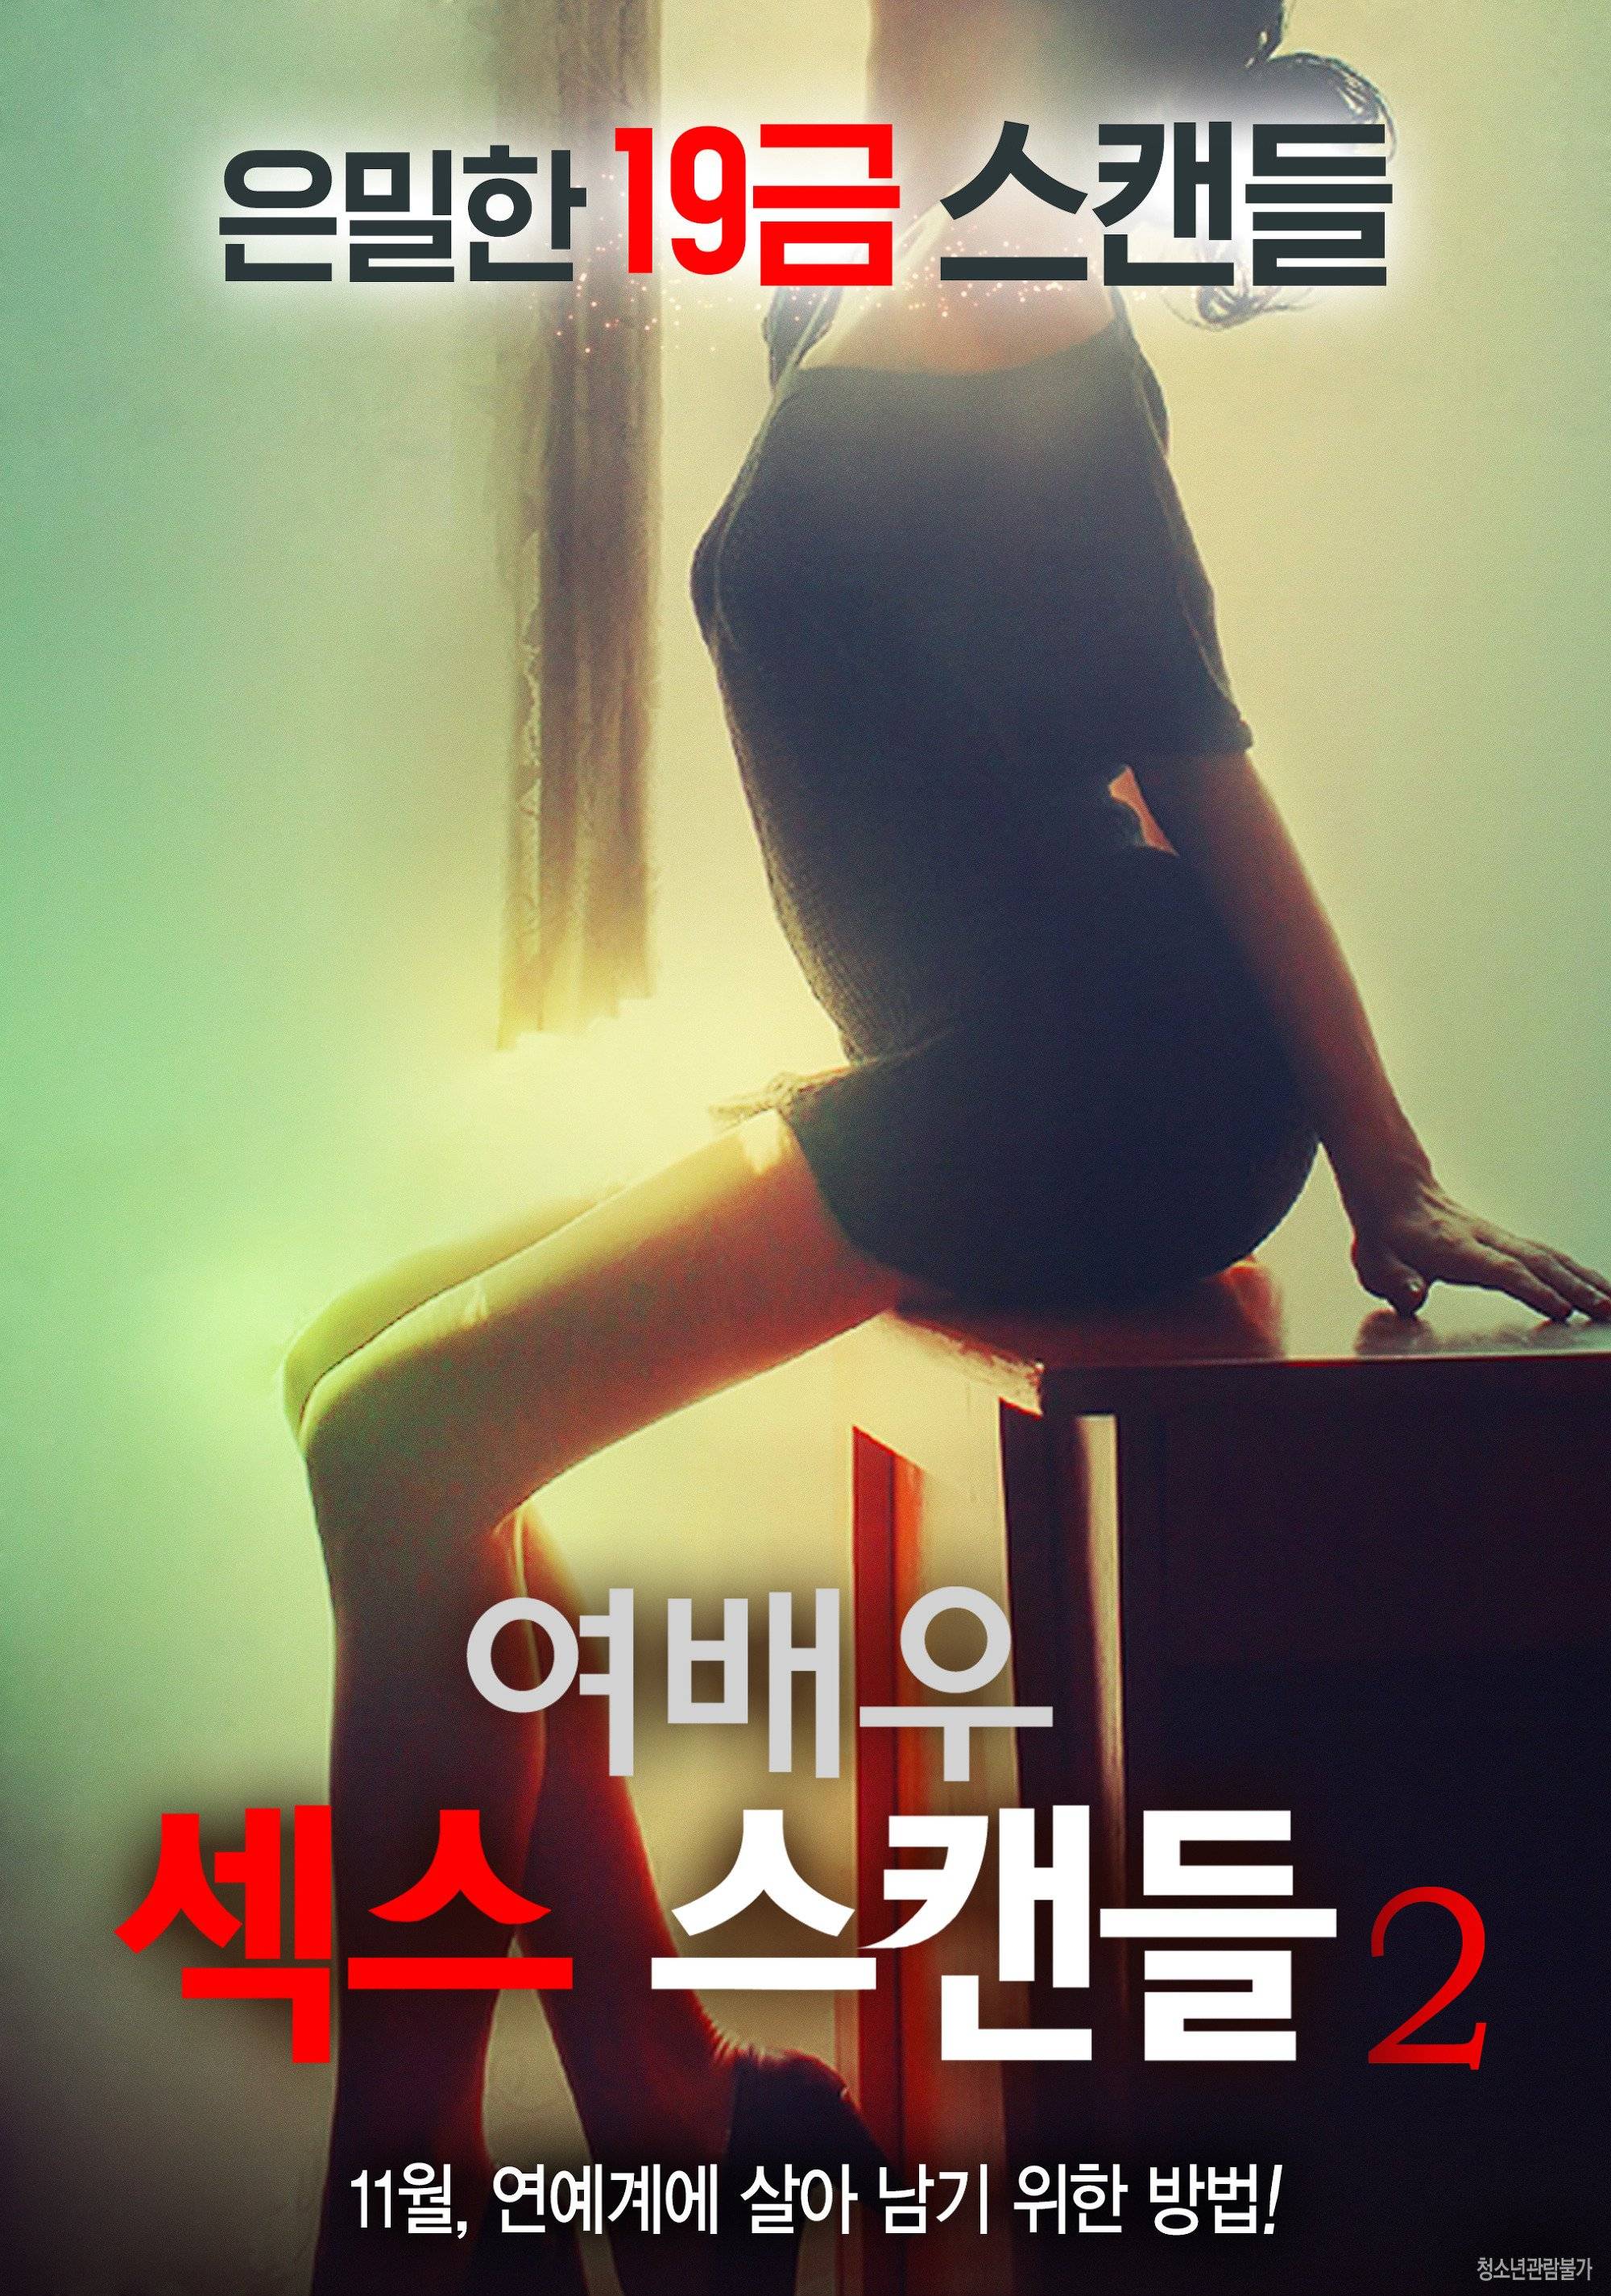 Korean Movie Opening Today 16 11 22 In Korea Hancinema